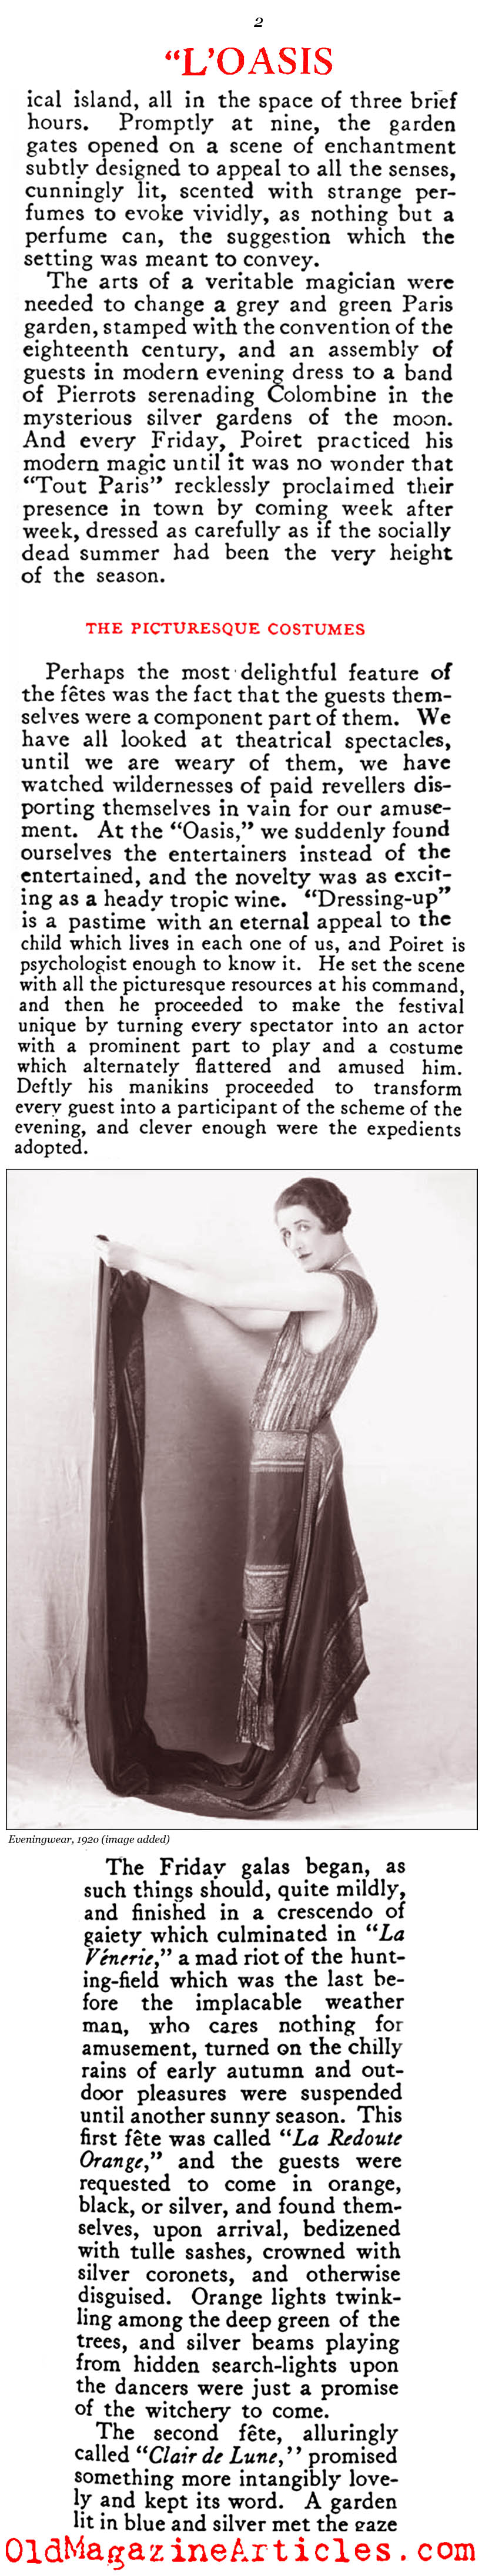 Chez Poiret: the Hot Social Ticket in the Paris of 1919 (Vogue Magazine, 1919)